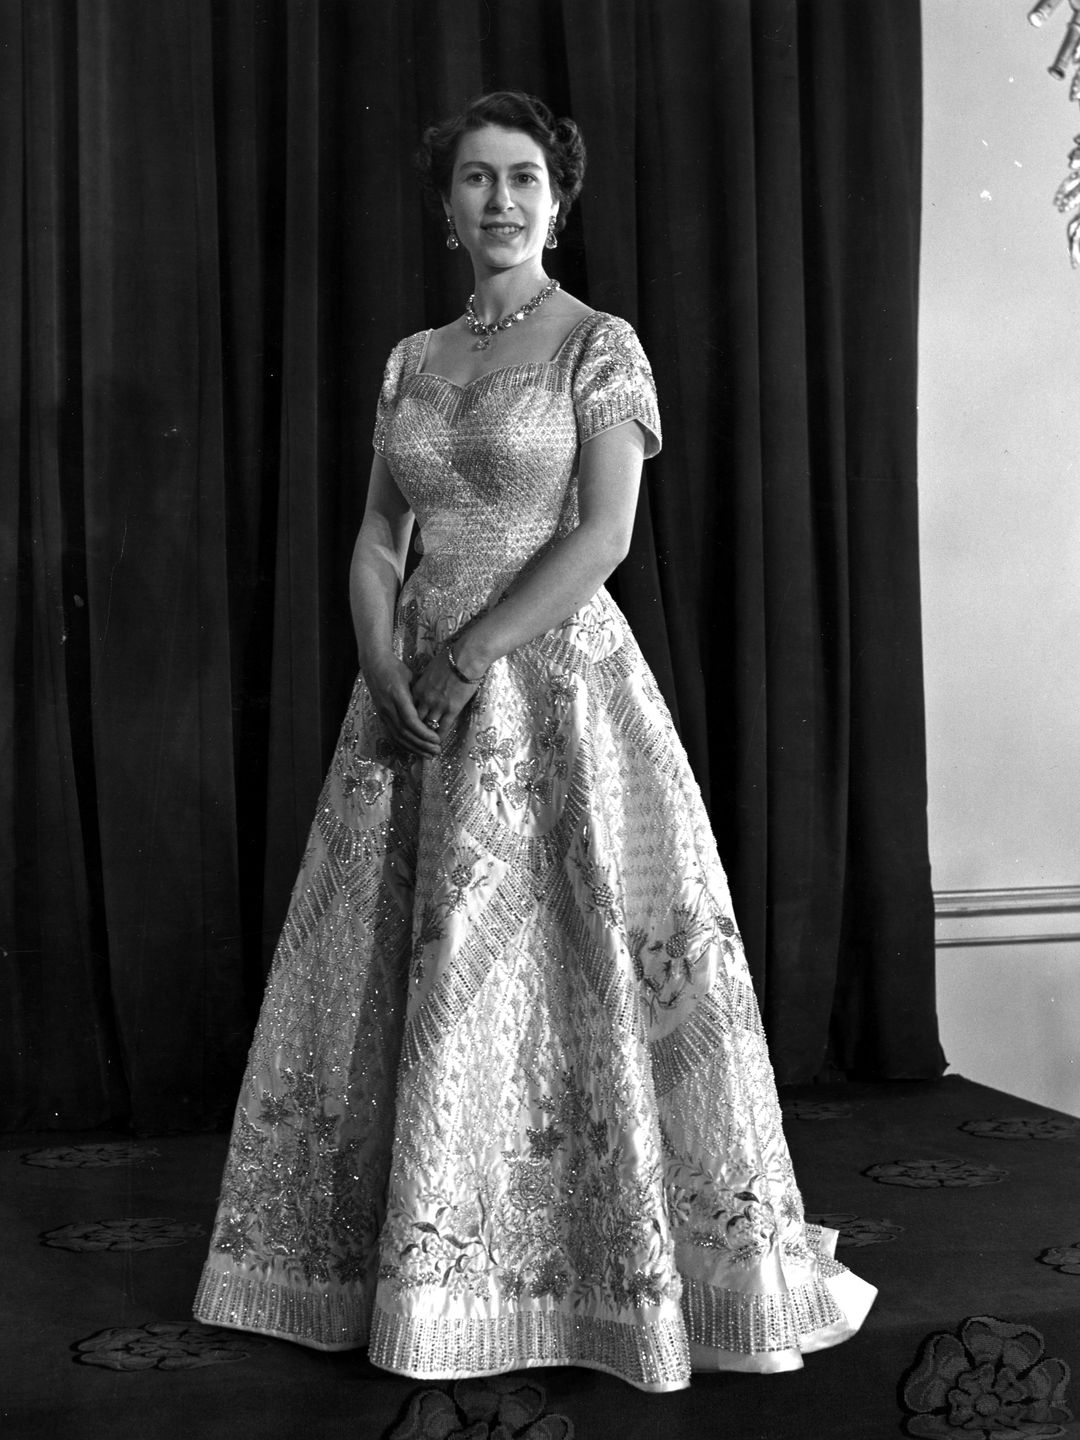 Queen Elizabeth II wearing her Coronation gown designed by Norman Hartnell 